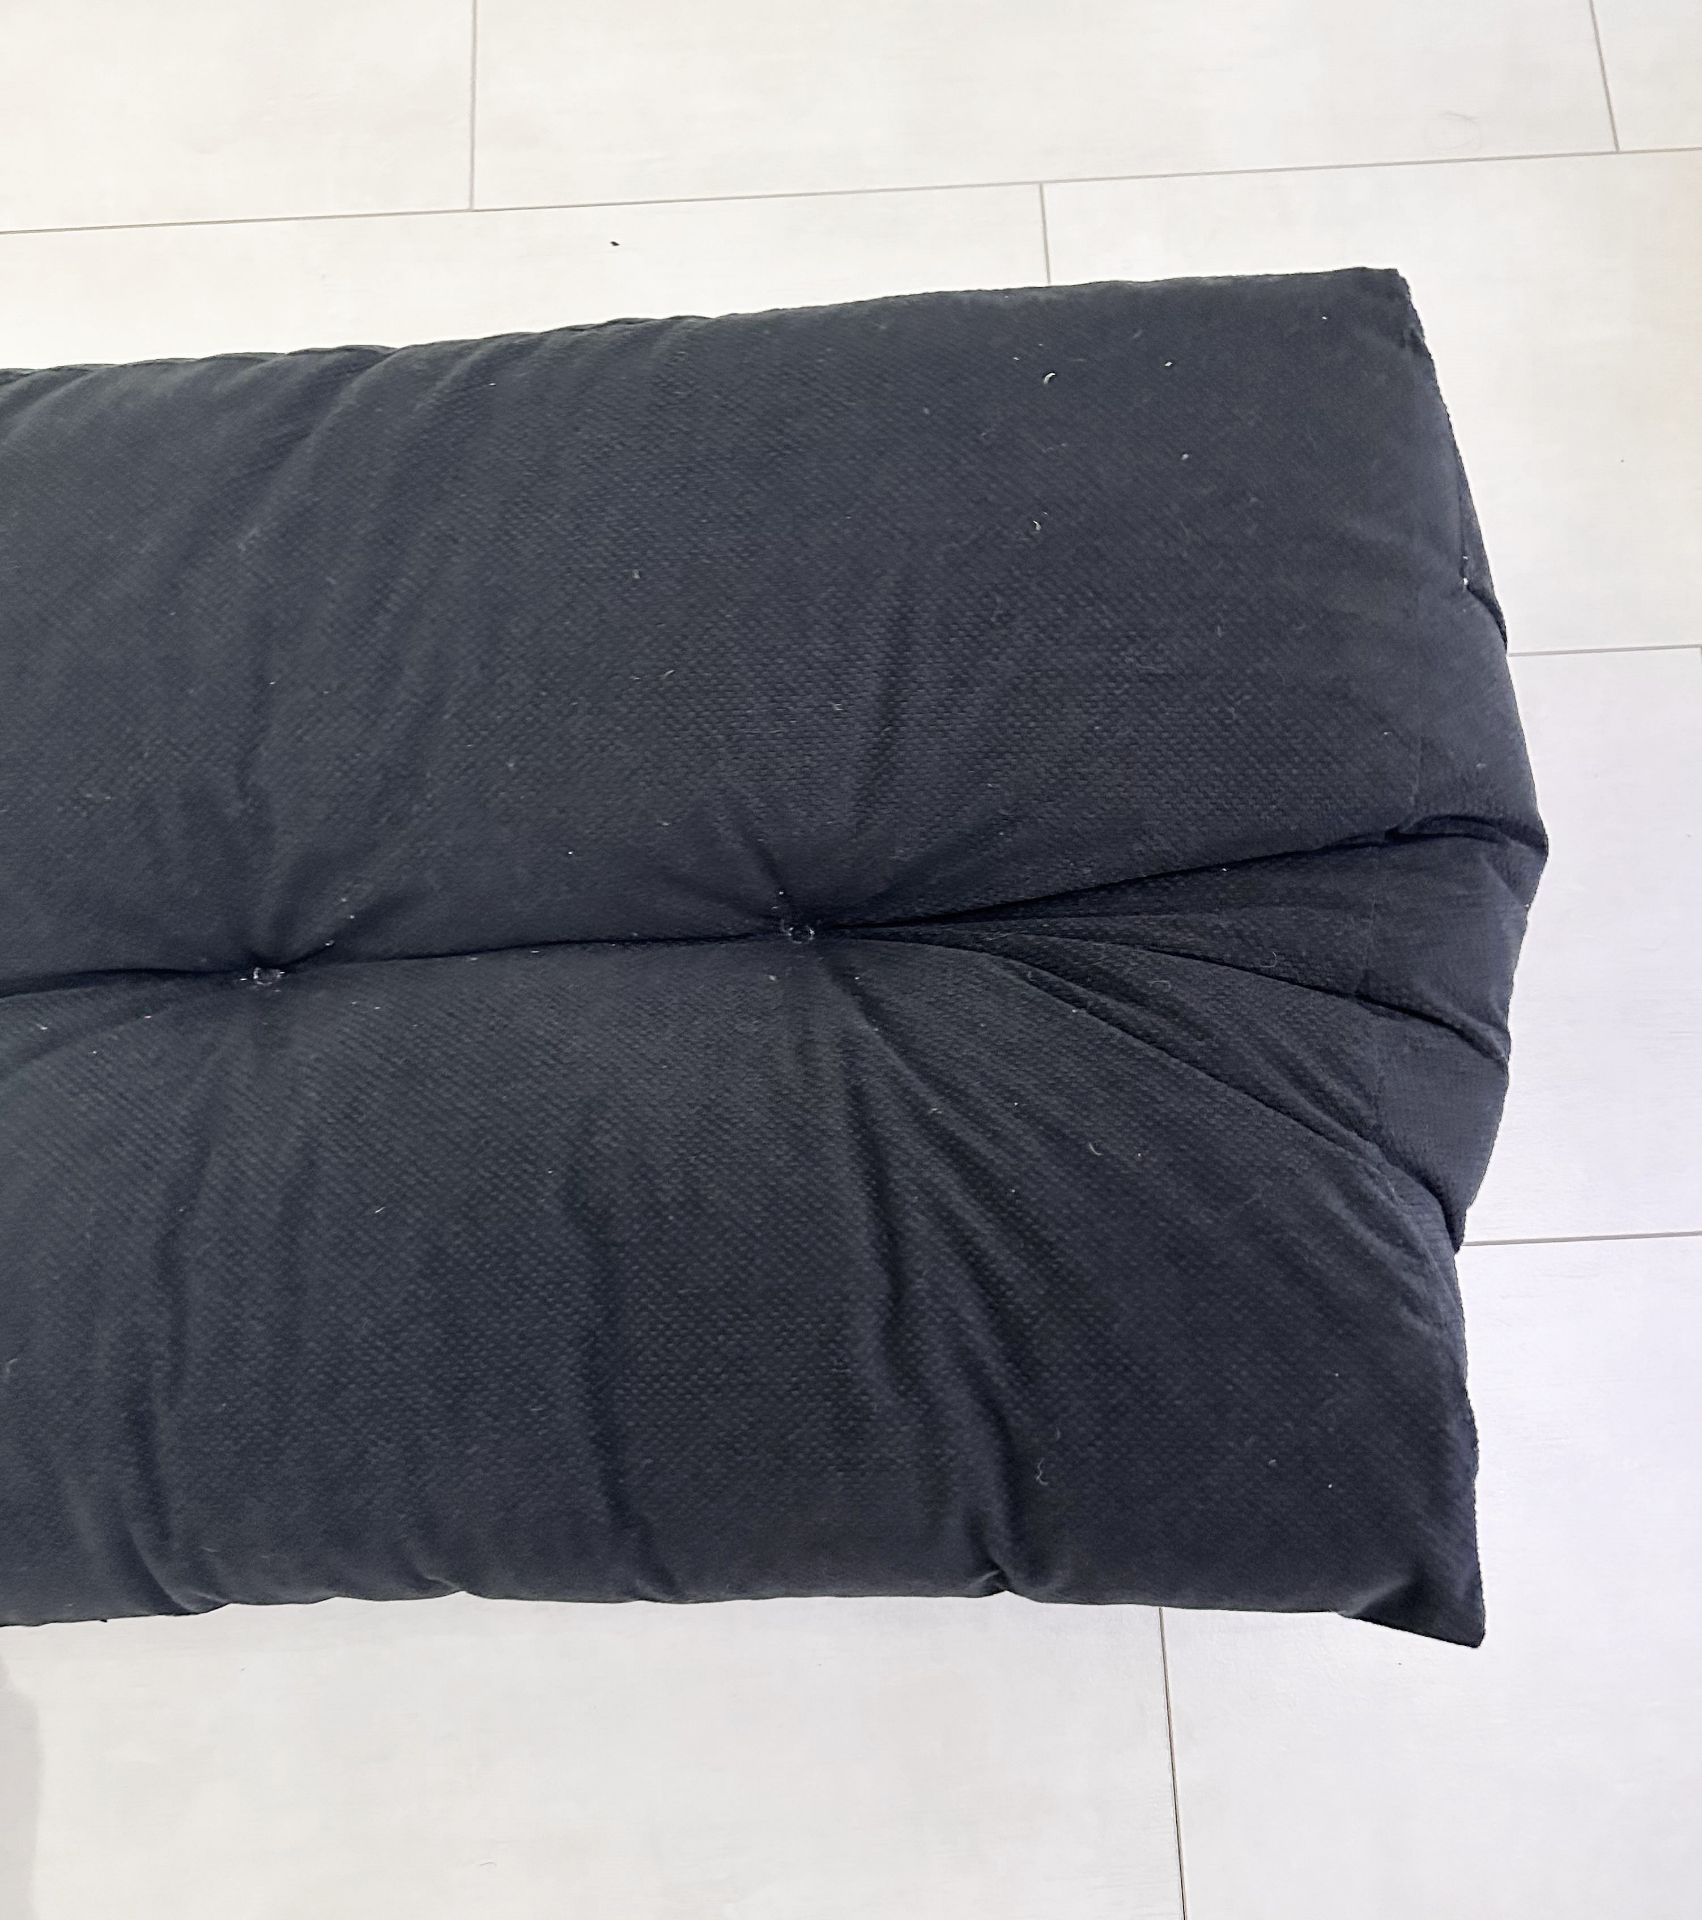 1 x Velvet Chenille Dark Grey Bolster/Headboard Cushion - Made In England - Dimensions: 140x50cm - Image 2 of 3